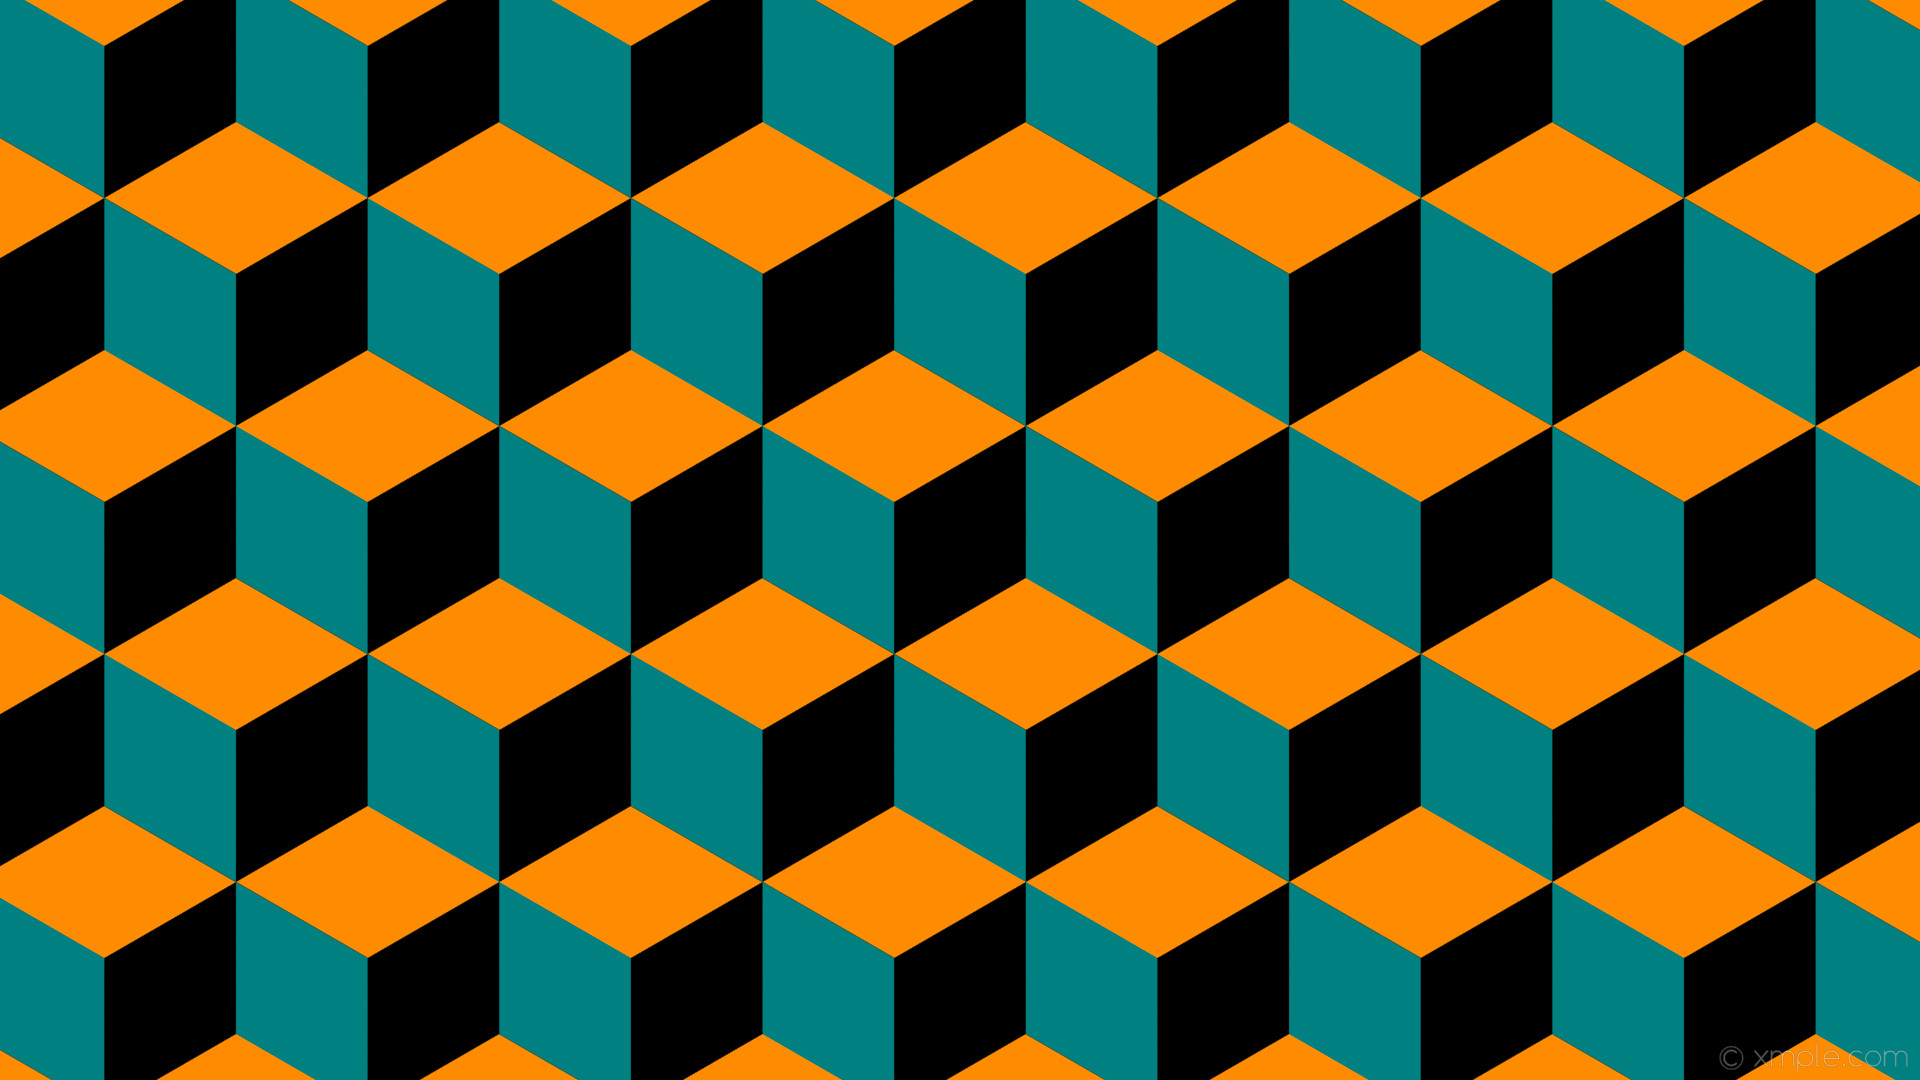 1920x1080 wallpaper green orange 3d cubes black dark orange teal #000000 #ff8c00  #008080 240